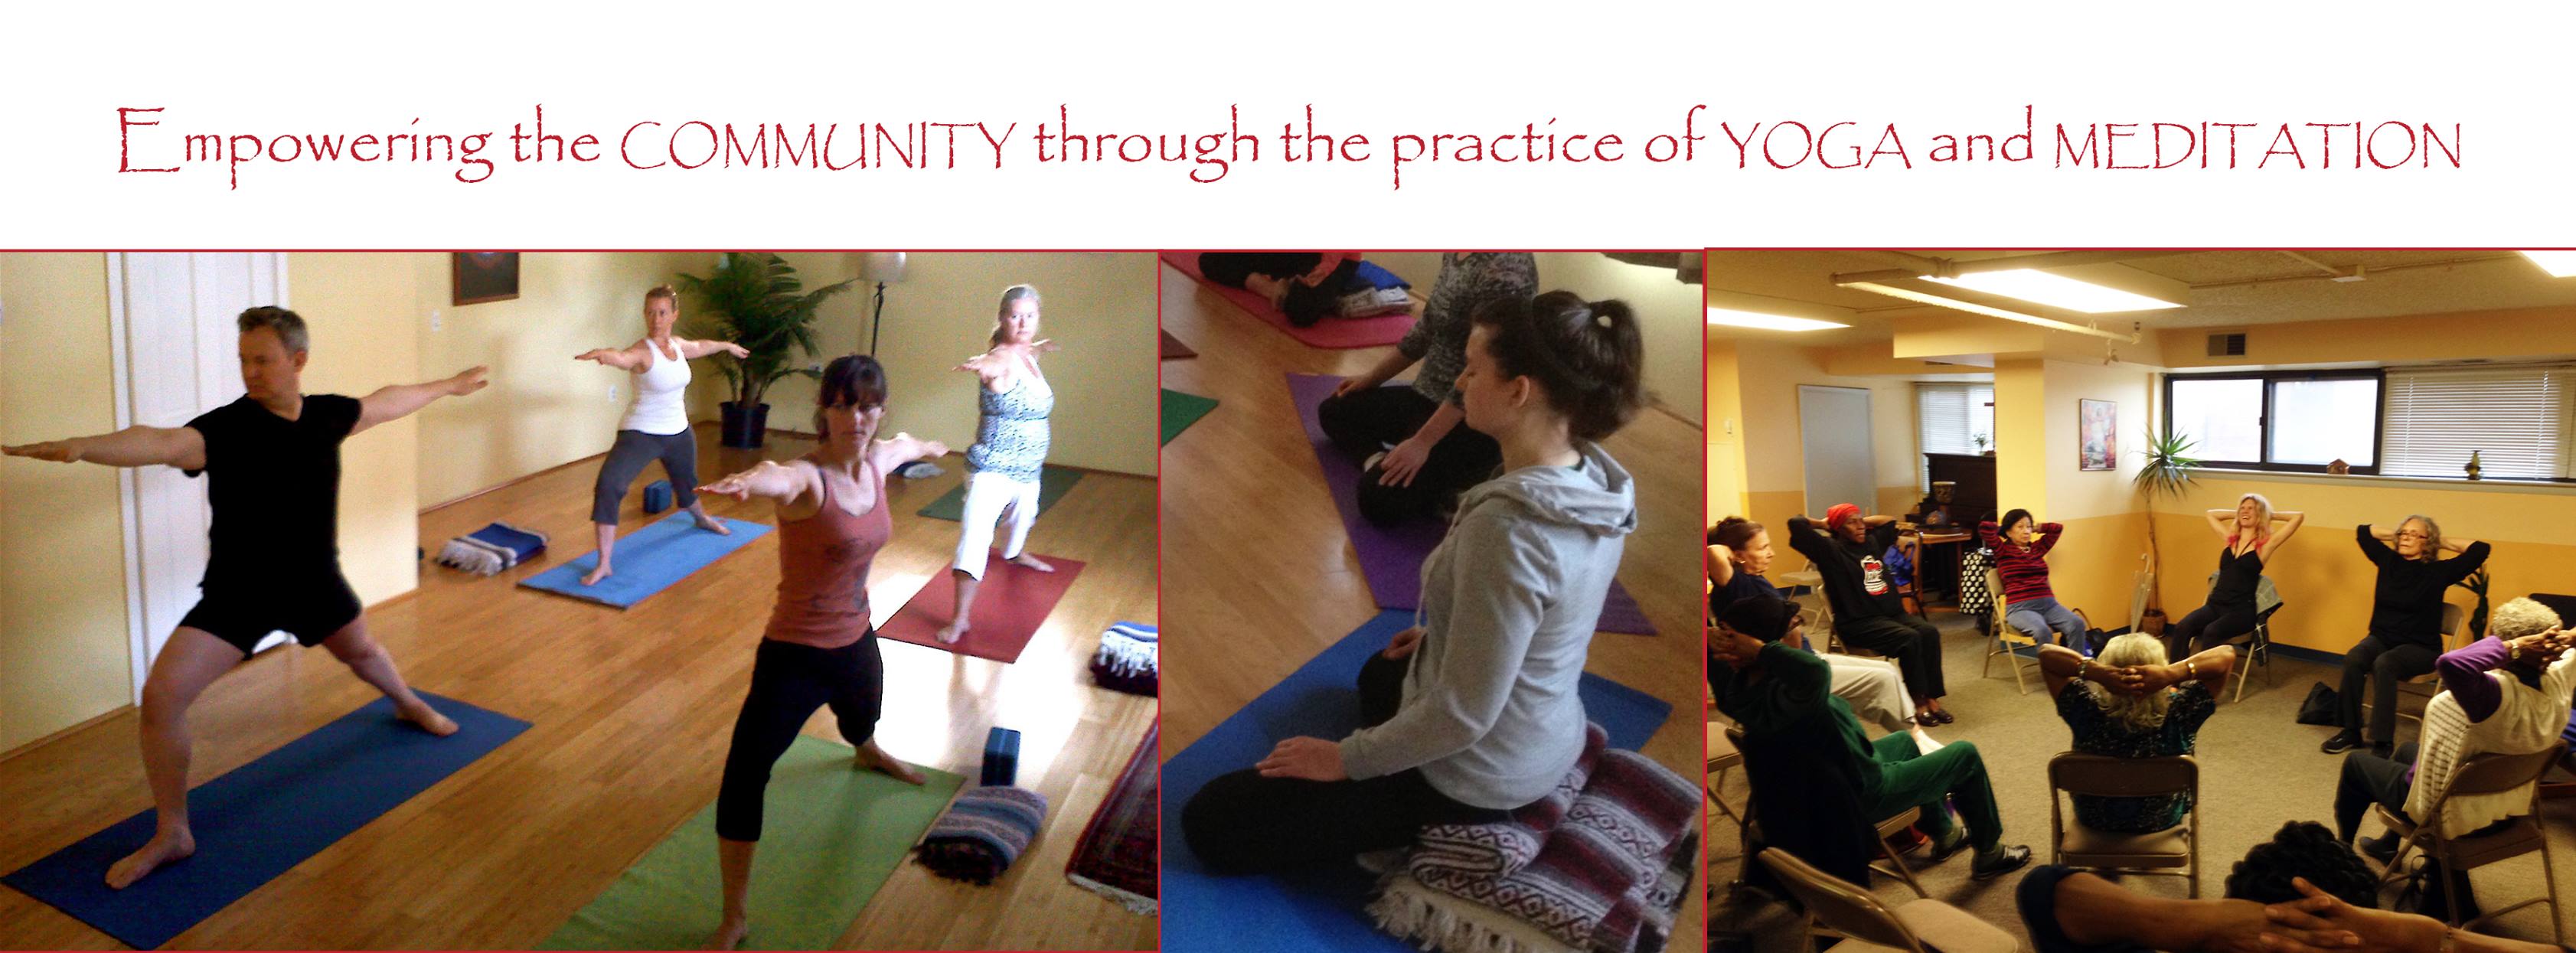 Raja Yoga and Meditation Center of Greater United states Philadelphia